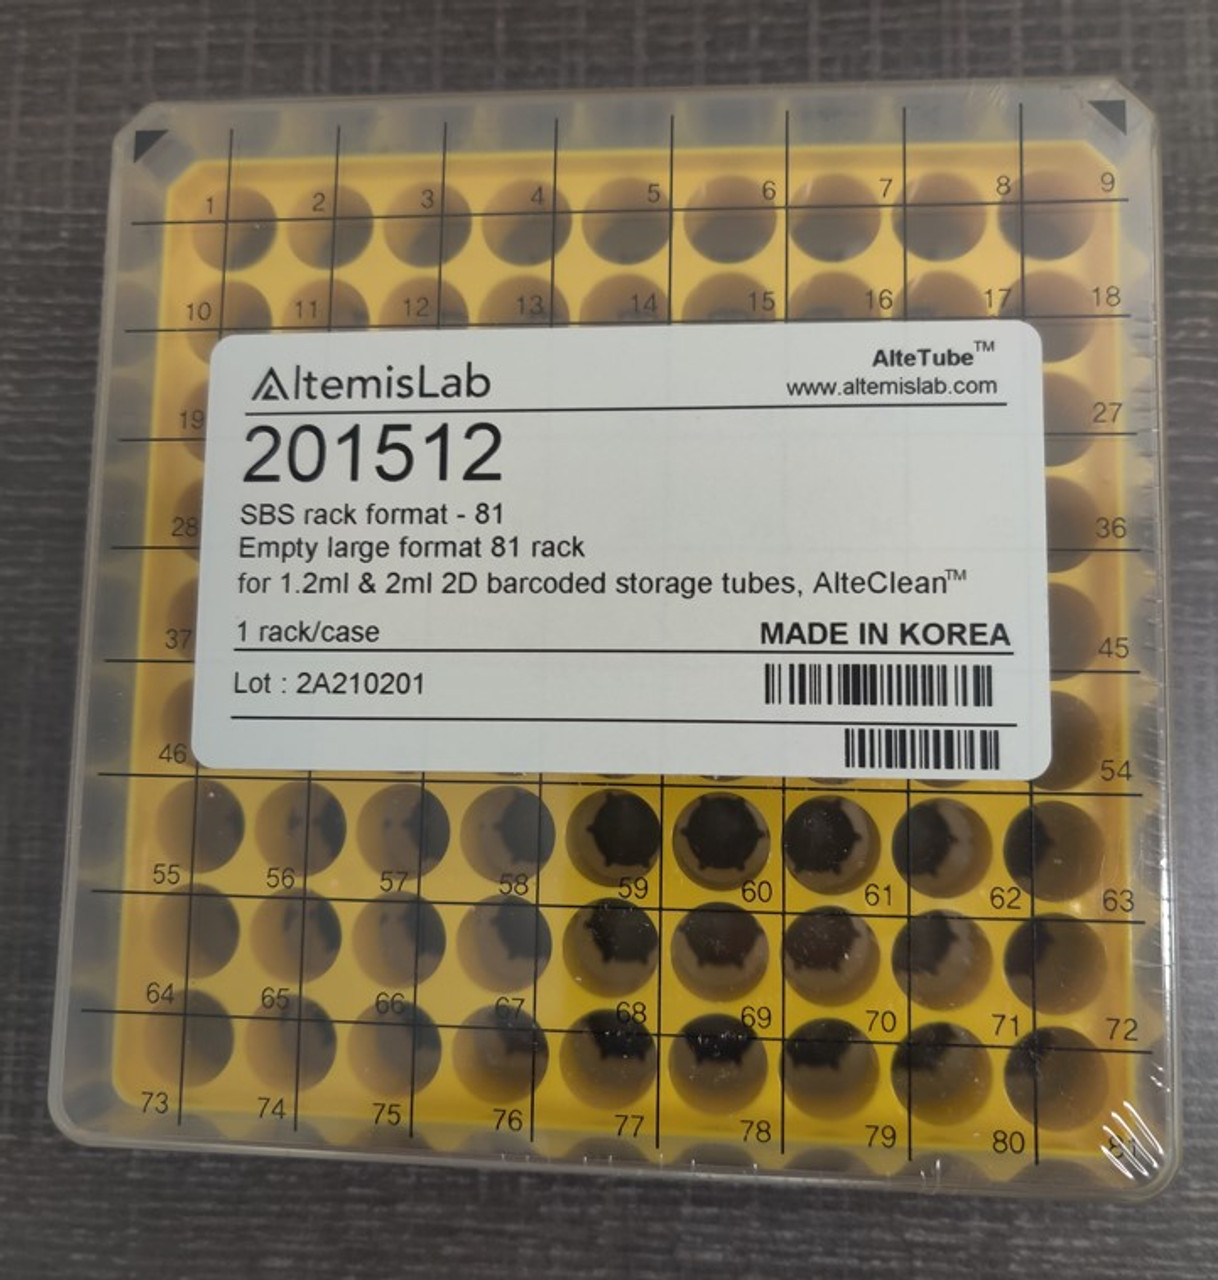 9x9 Microtube Freezer Storage Box, Plastic